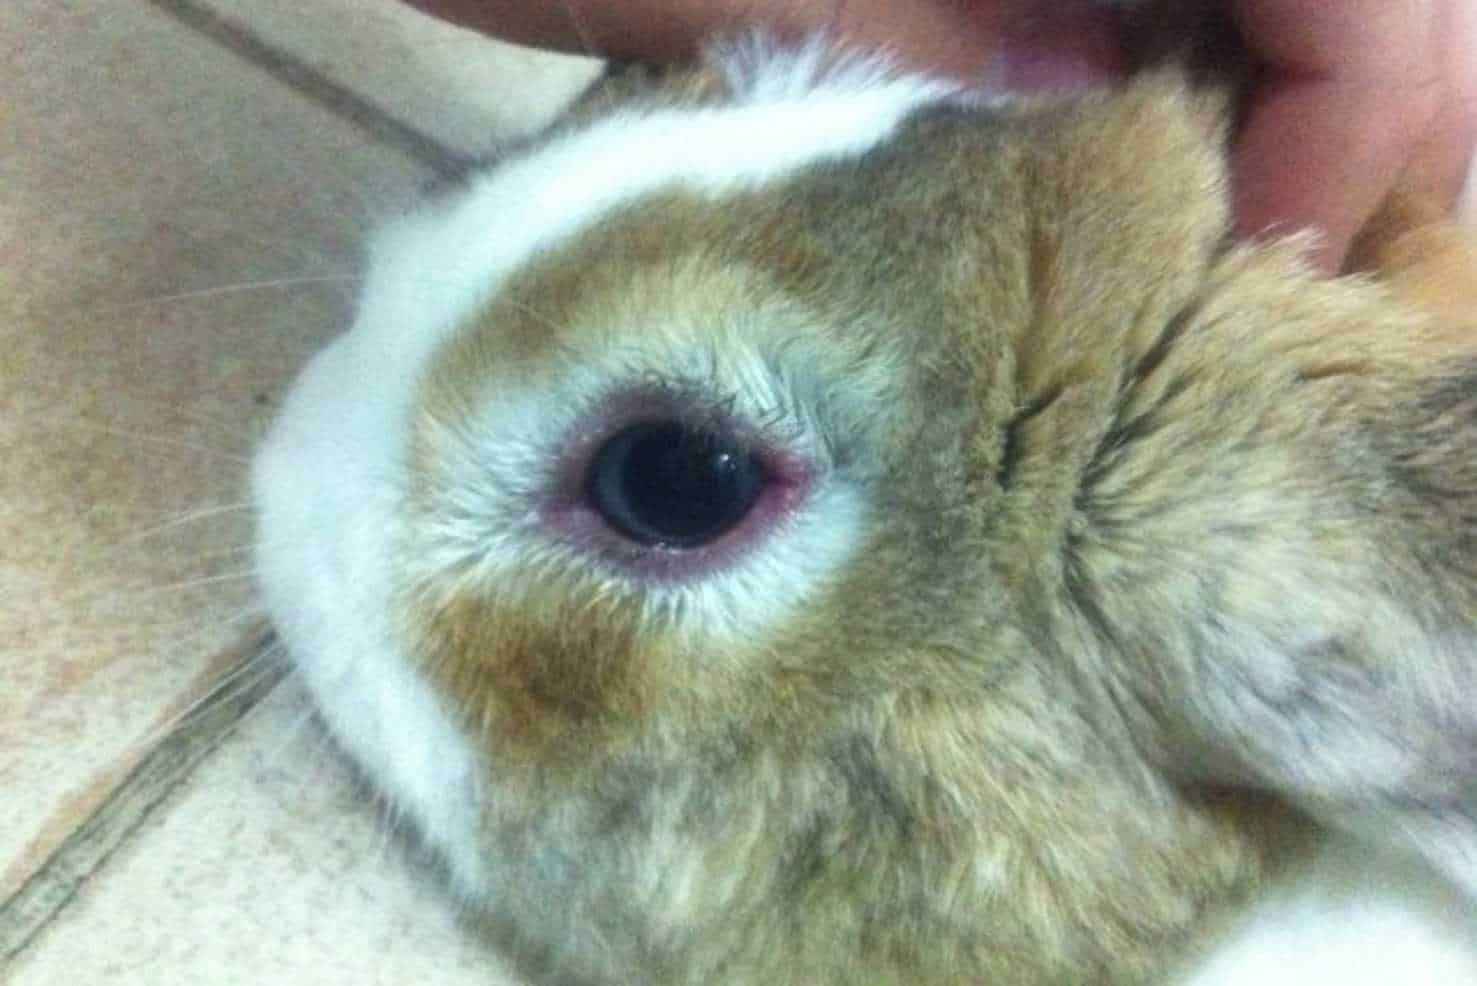 rabbit eye problems